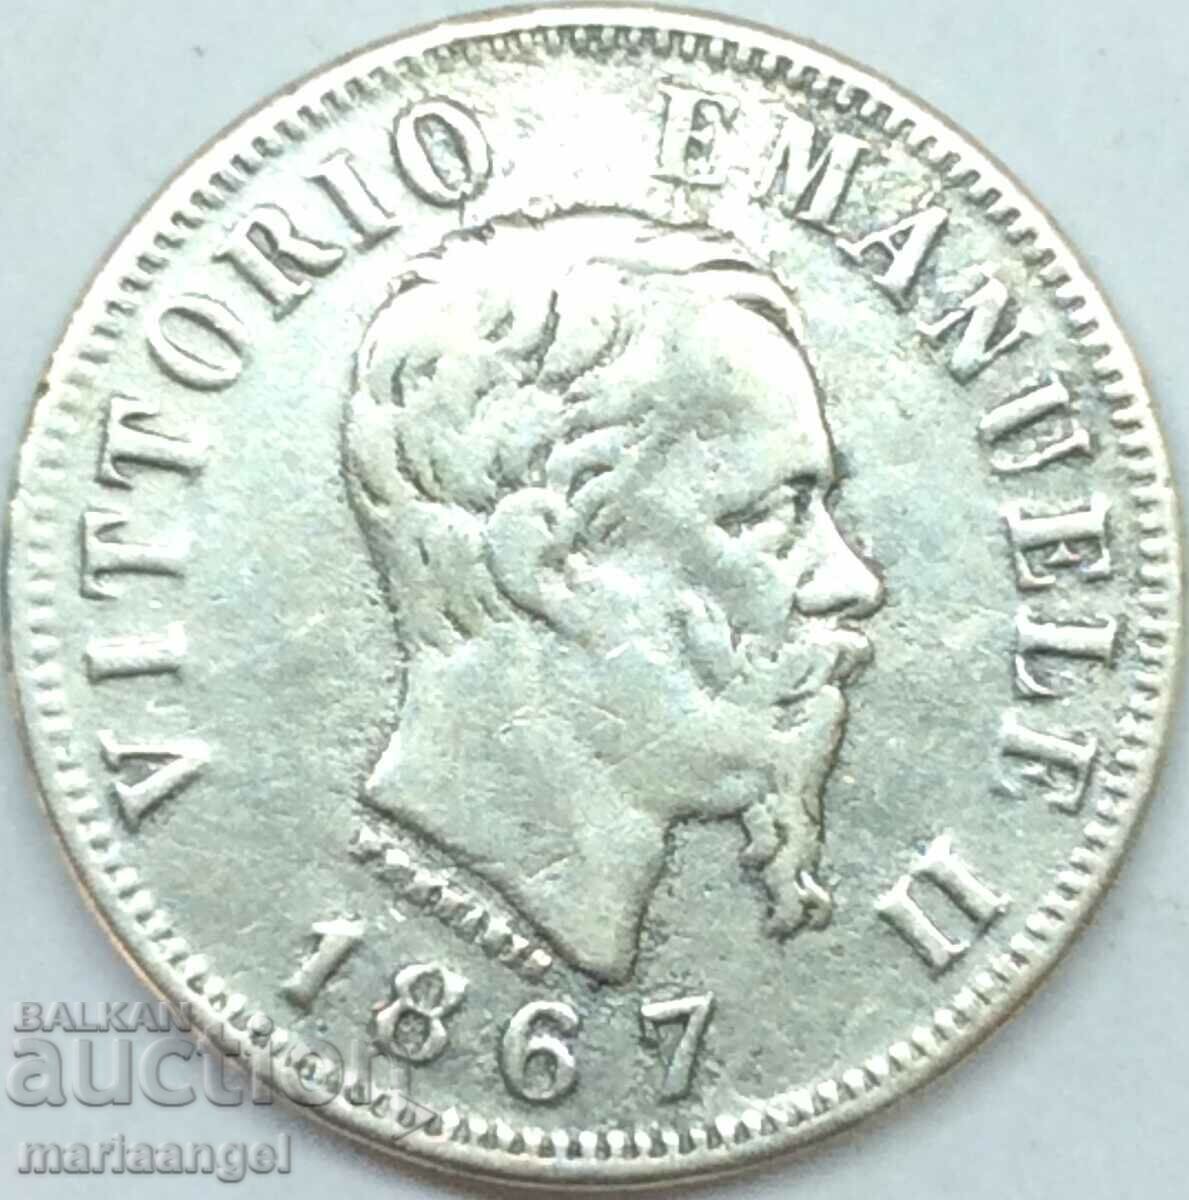 1867 50 centesimi Italy Naples silver